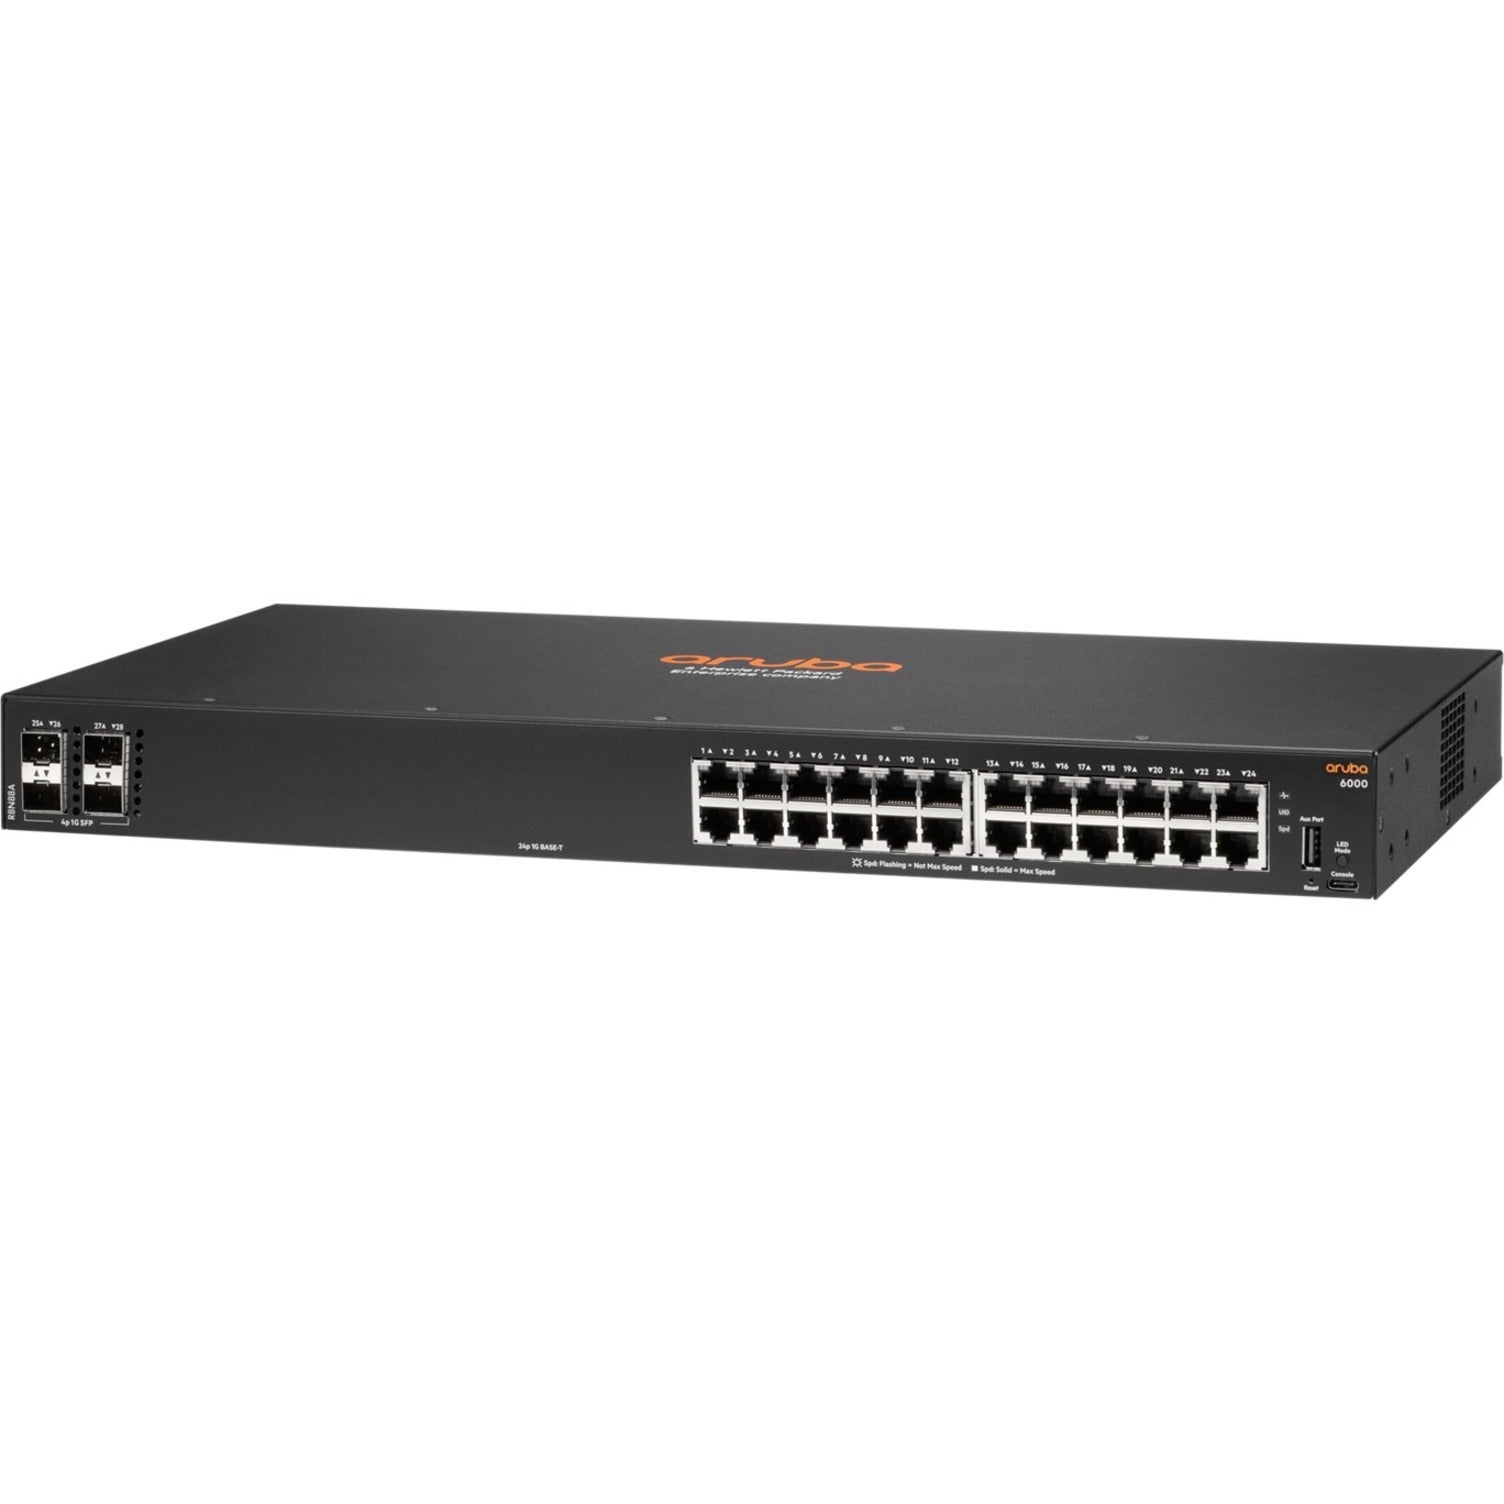 Aruba 6000 24G 4SFP Switch Gigabit Ethernet 24 Ports Power over Ethernet